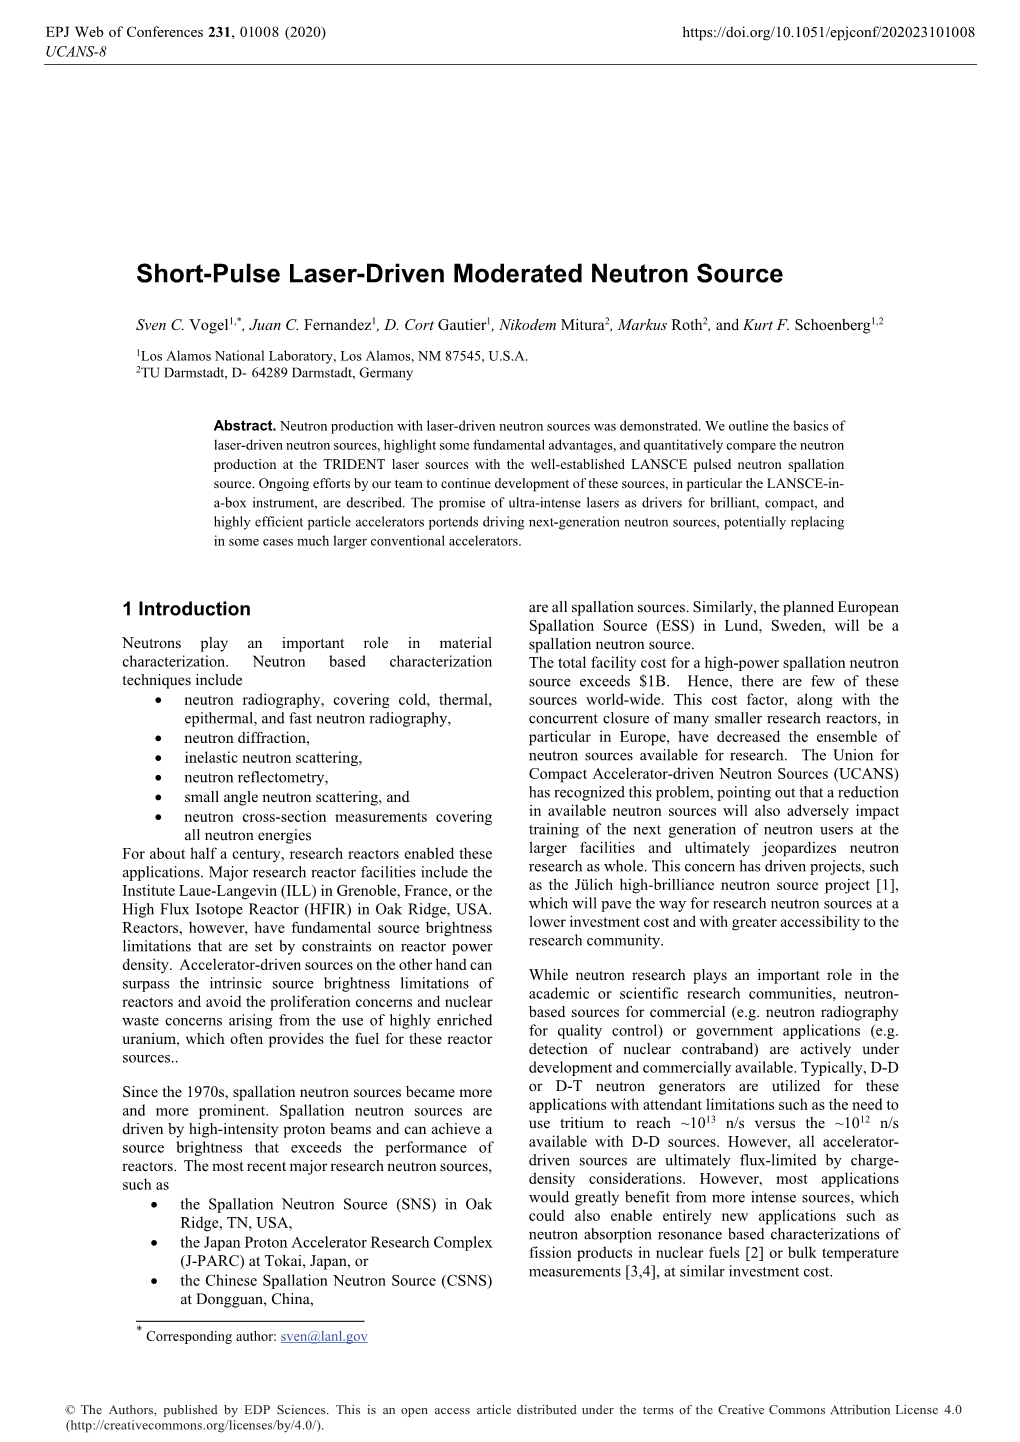 Short-Pulse Laser-Driven Moderated Neutron Source